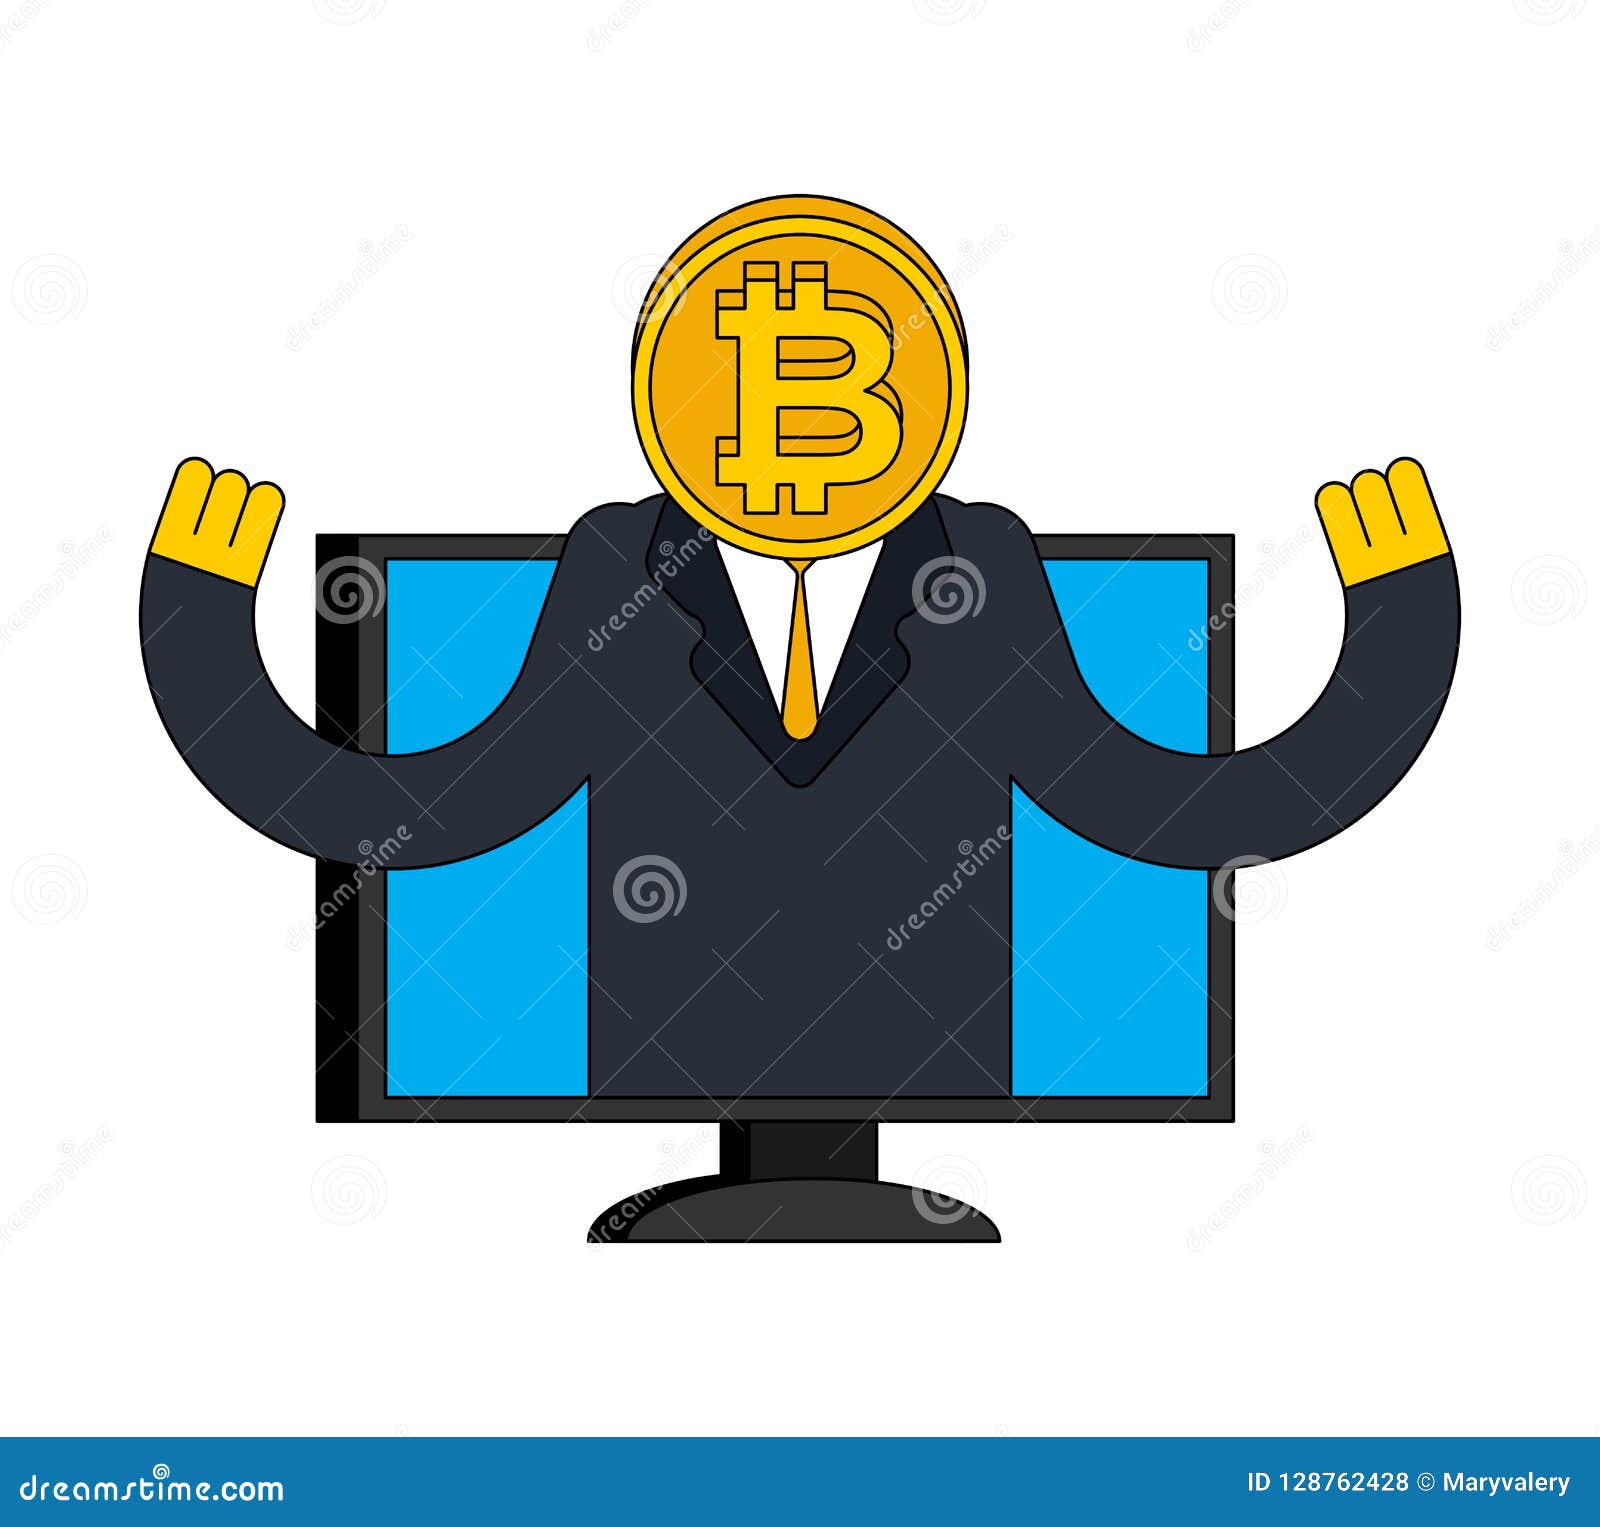 broker operator bitcoin